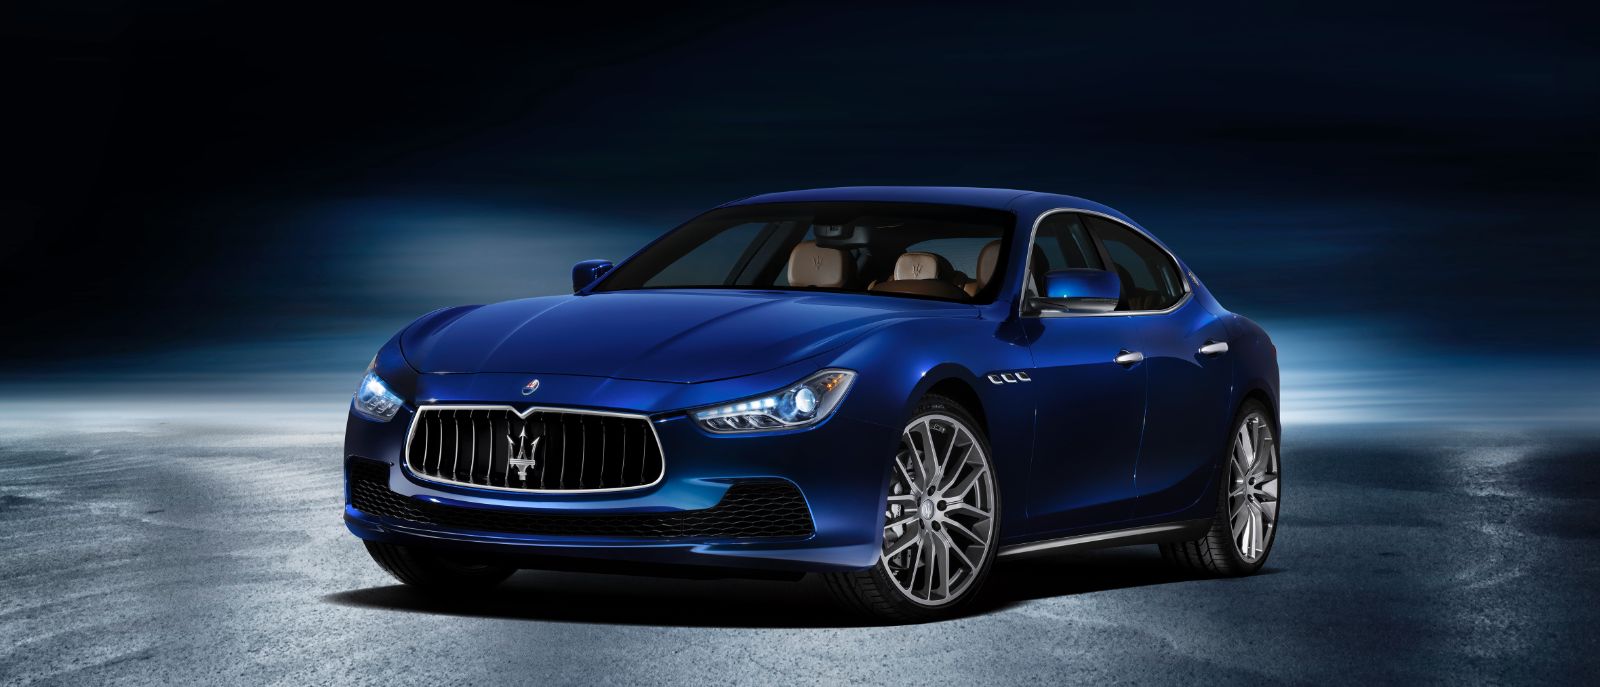 Maserati-Ghibli-3-4-anteriore-blu